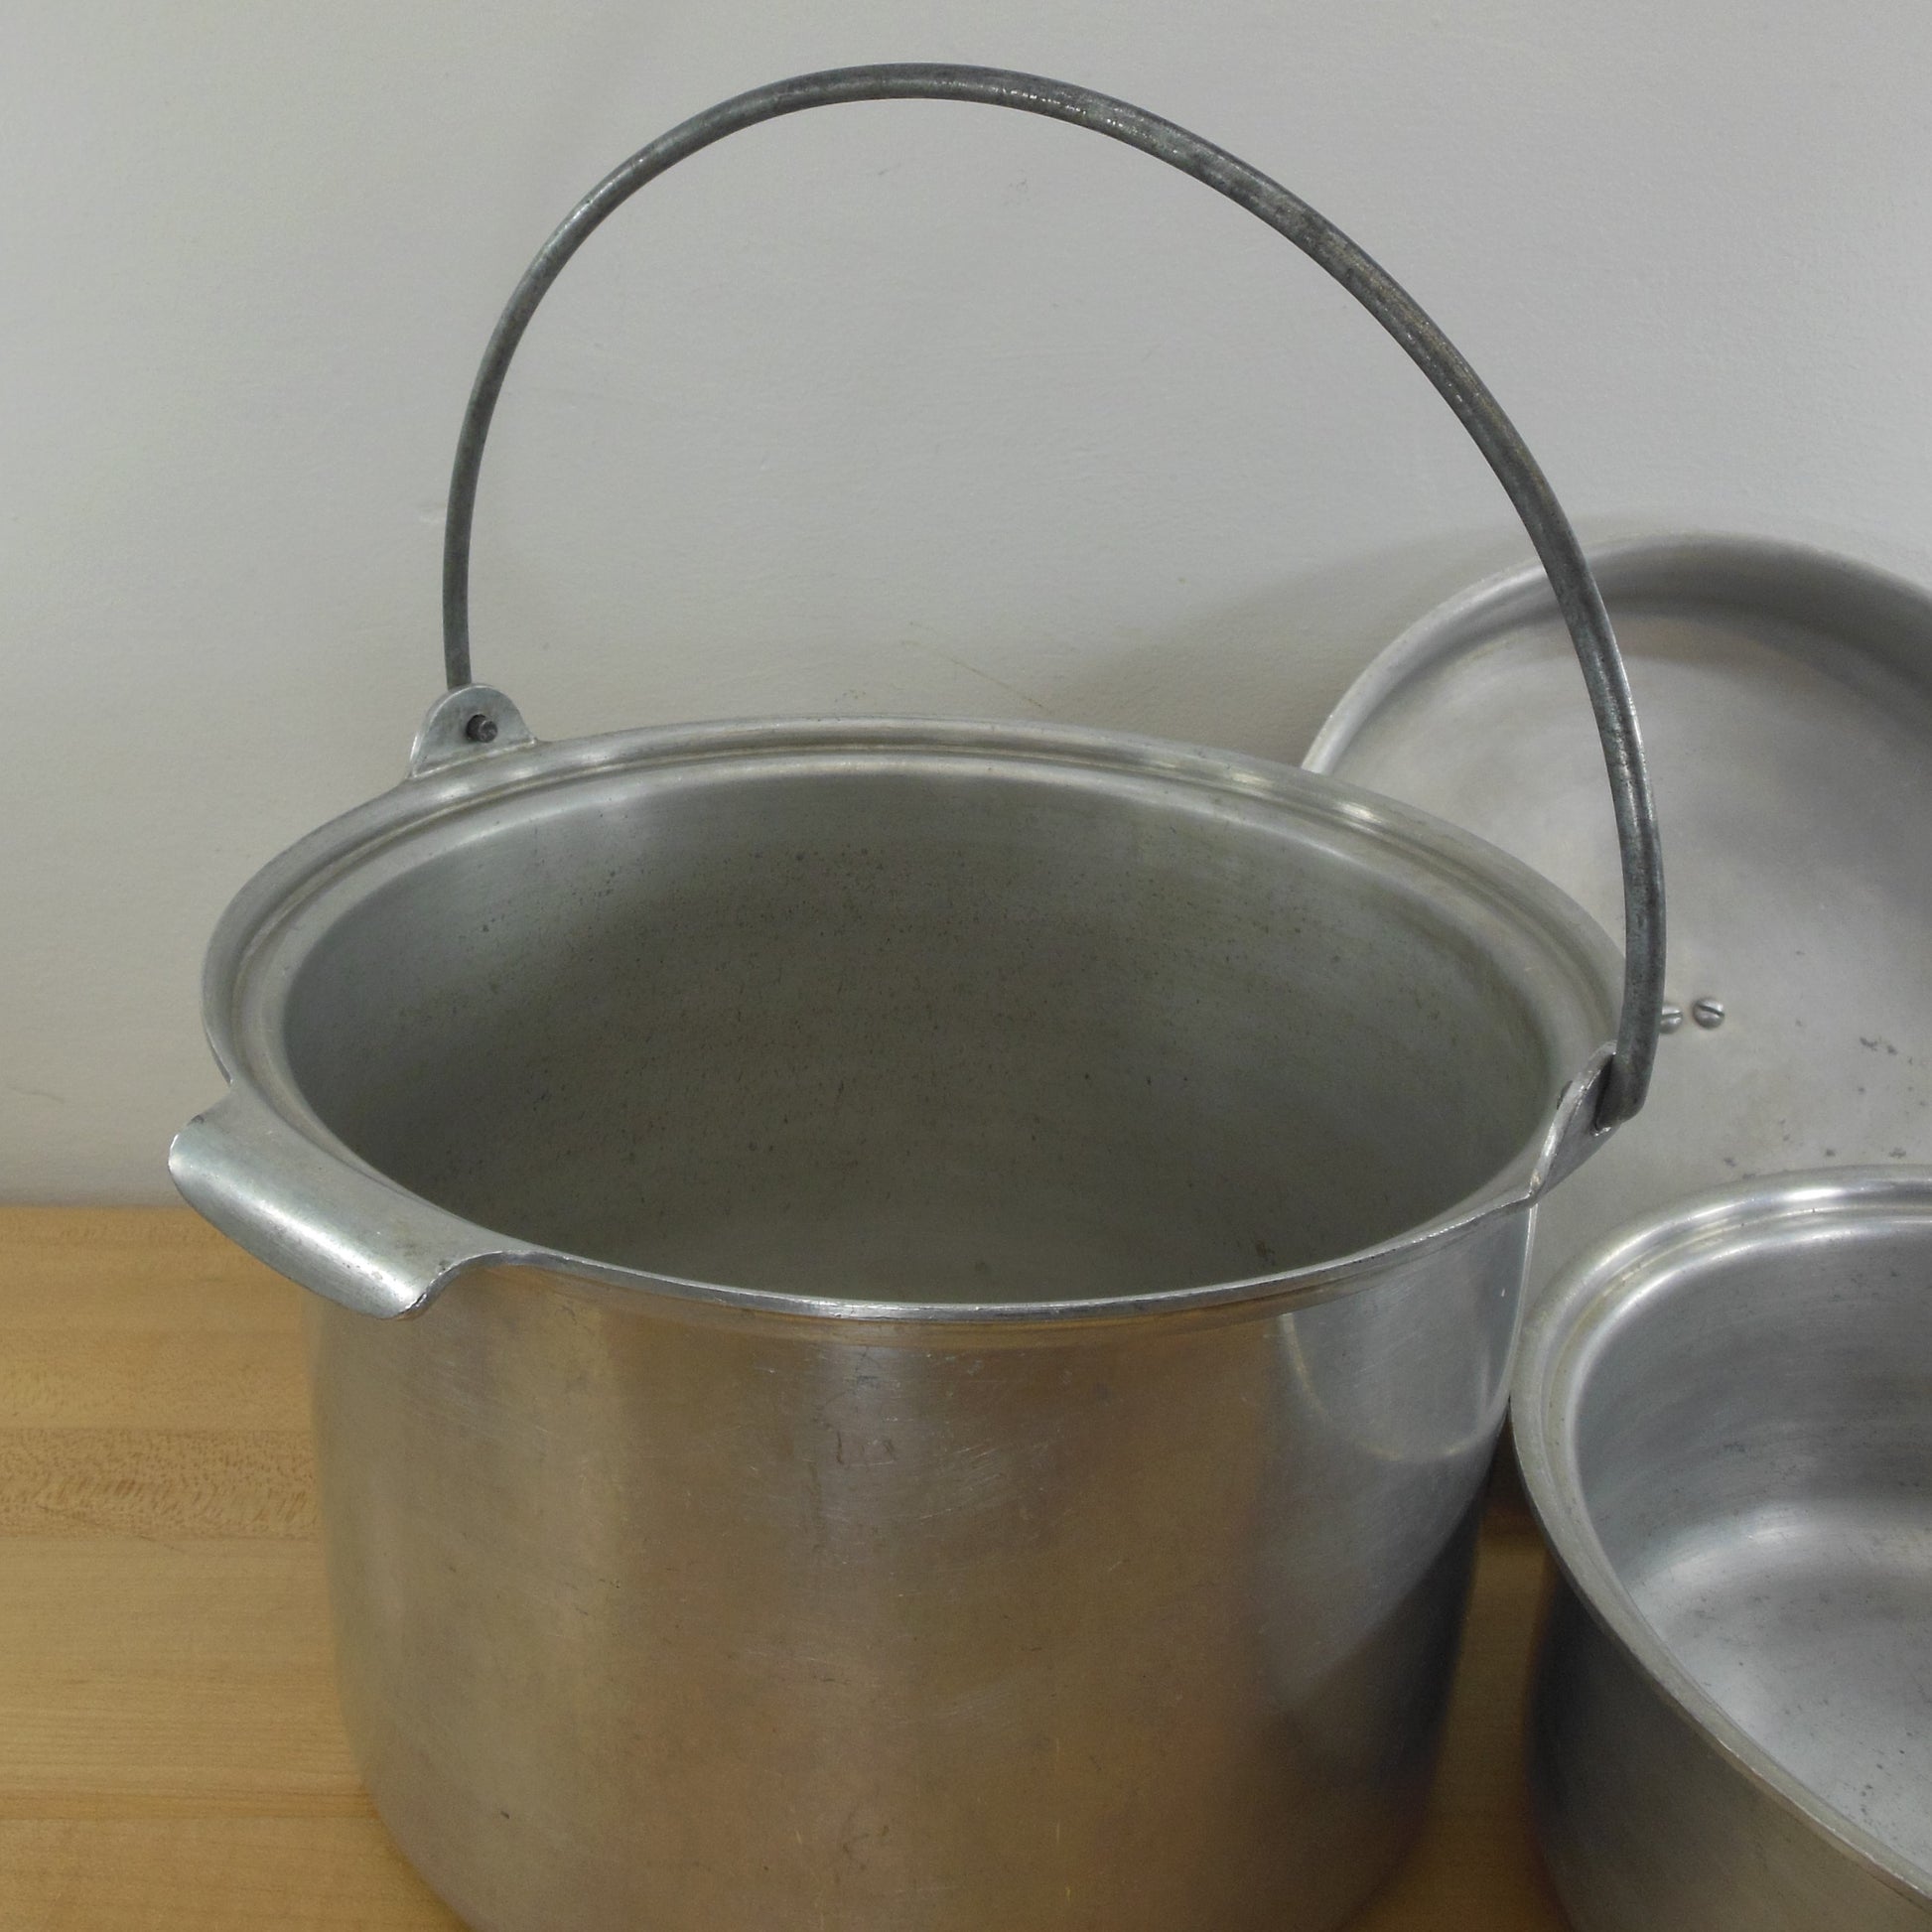 JSP Pressure Pot, 8 quart. Made of high quality aluminum. Dental curing pot